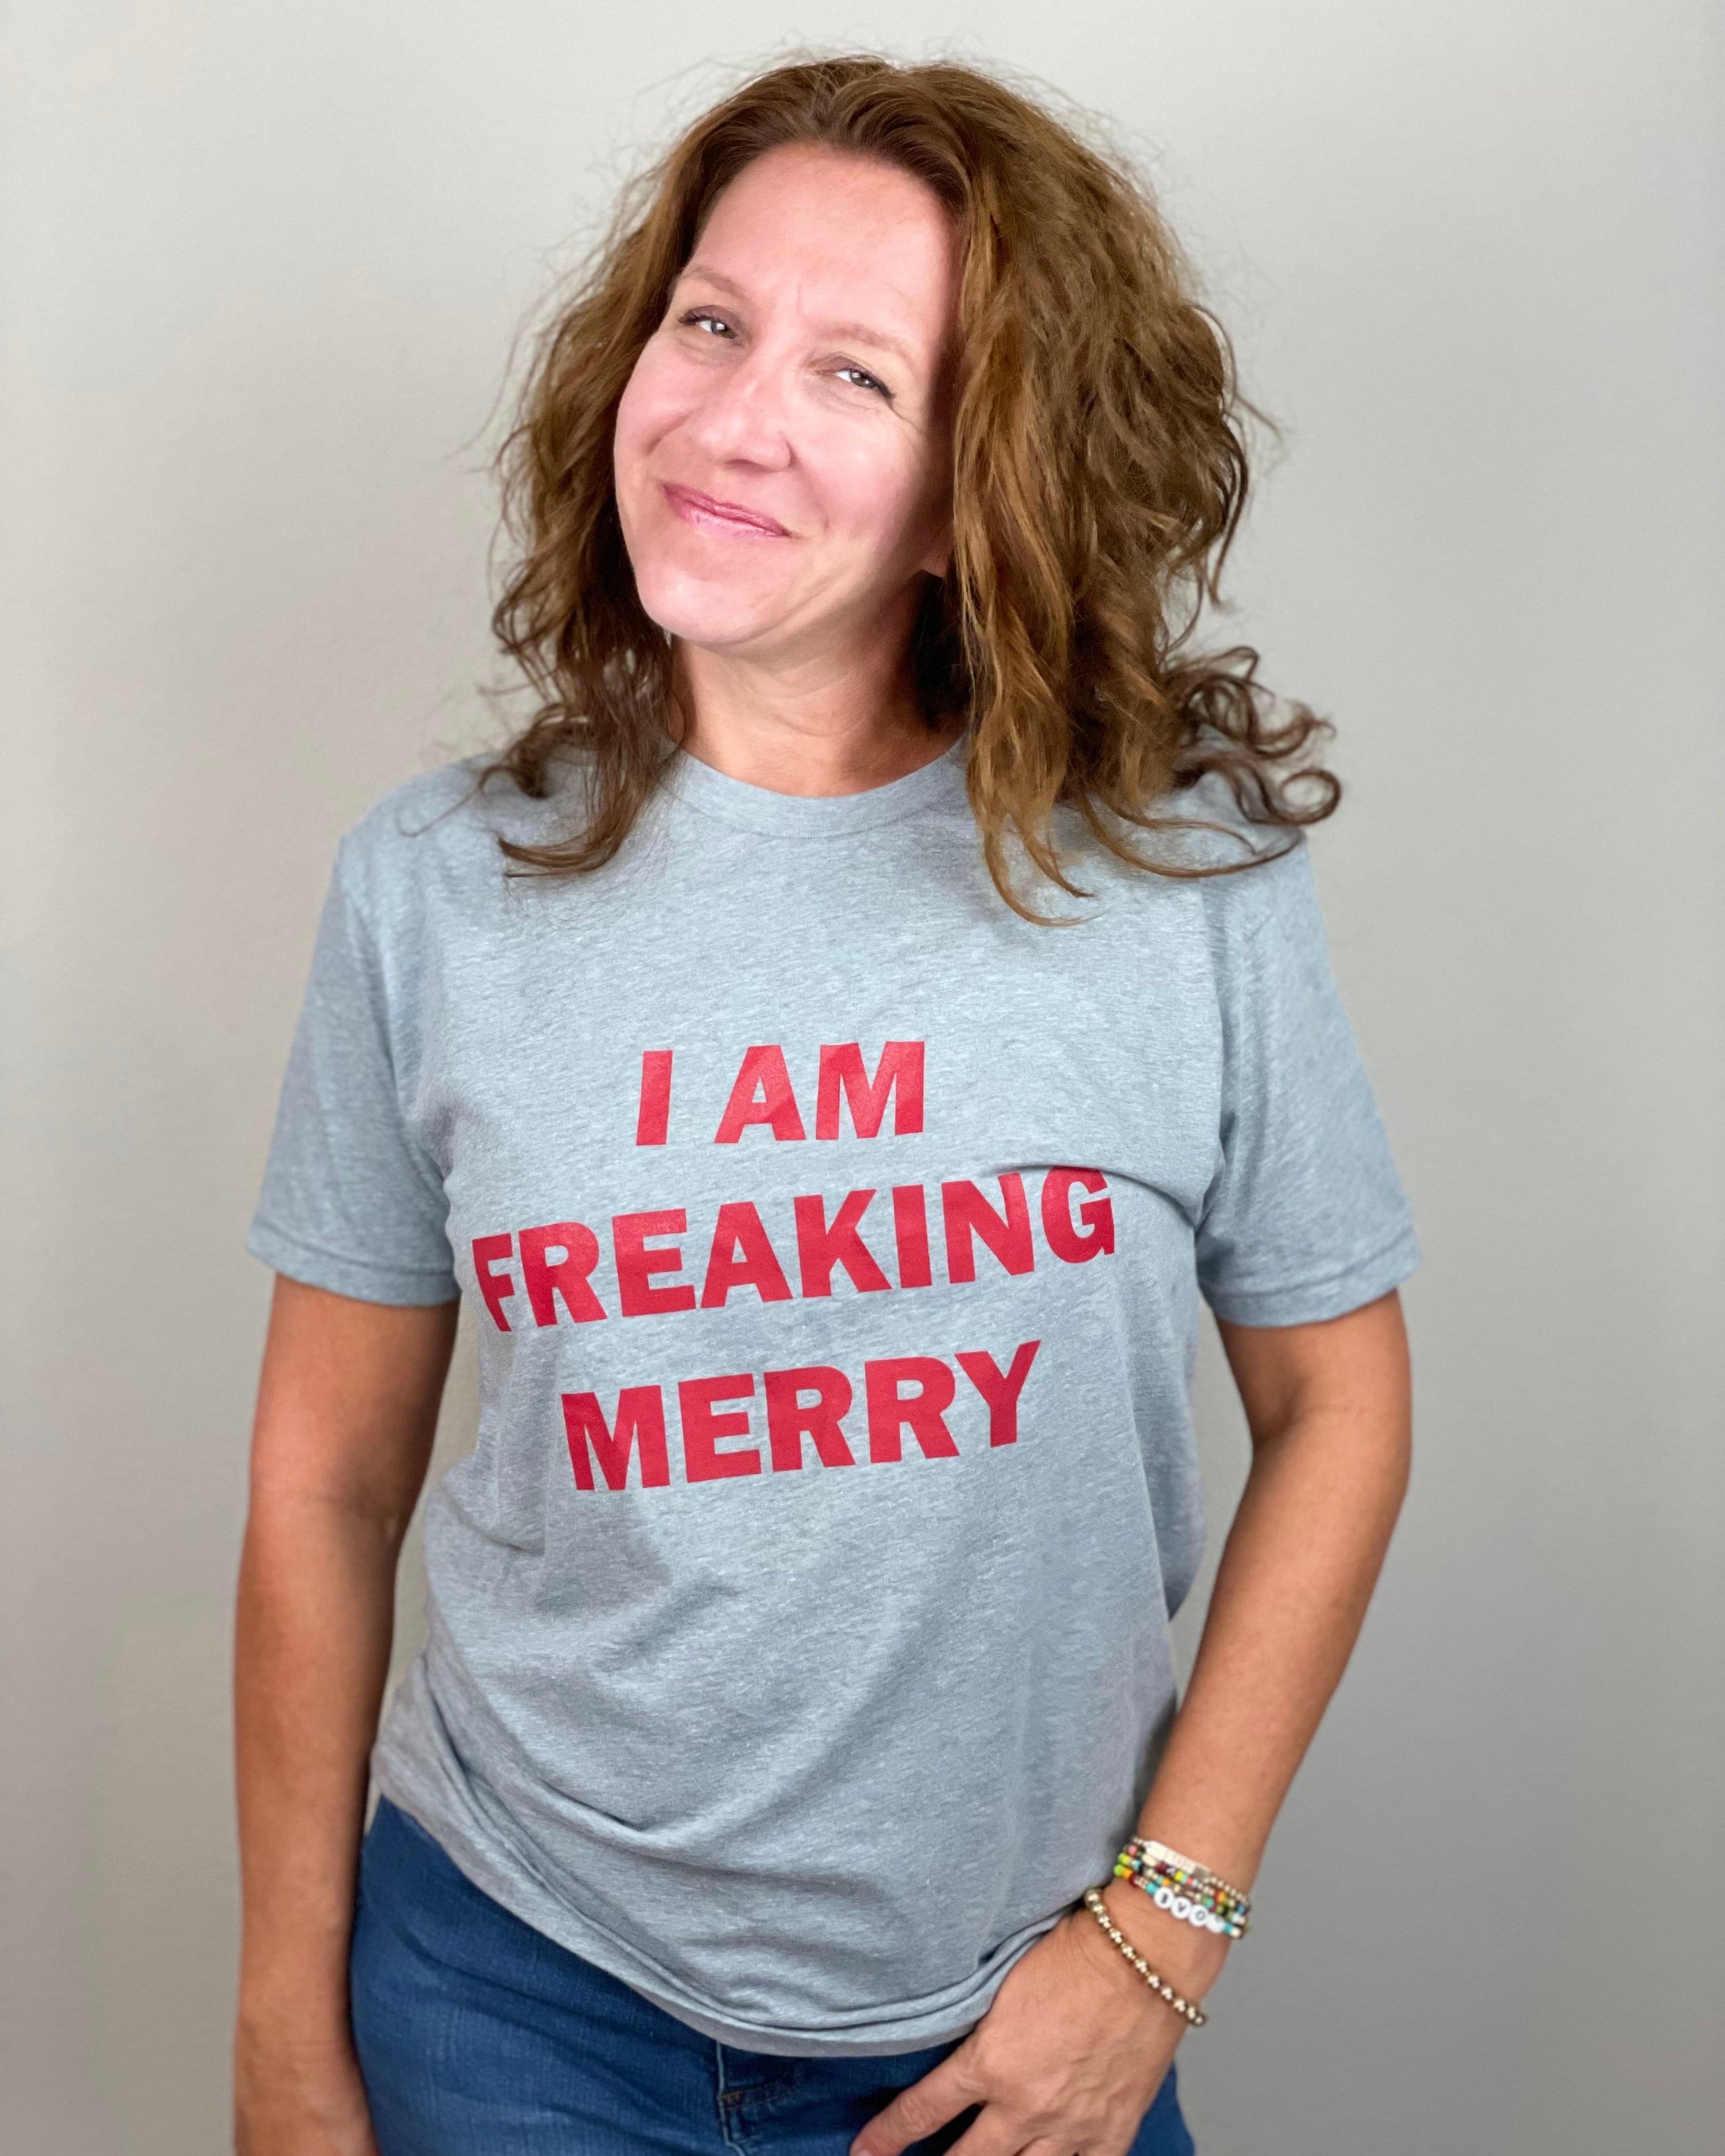 I Am Freaking Merry Tee Shirt.